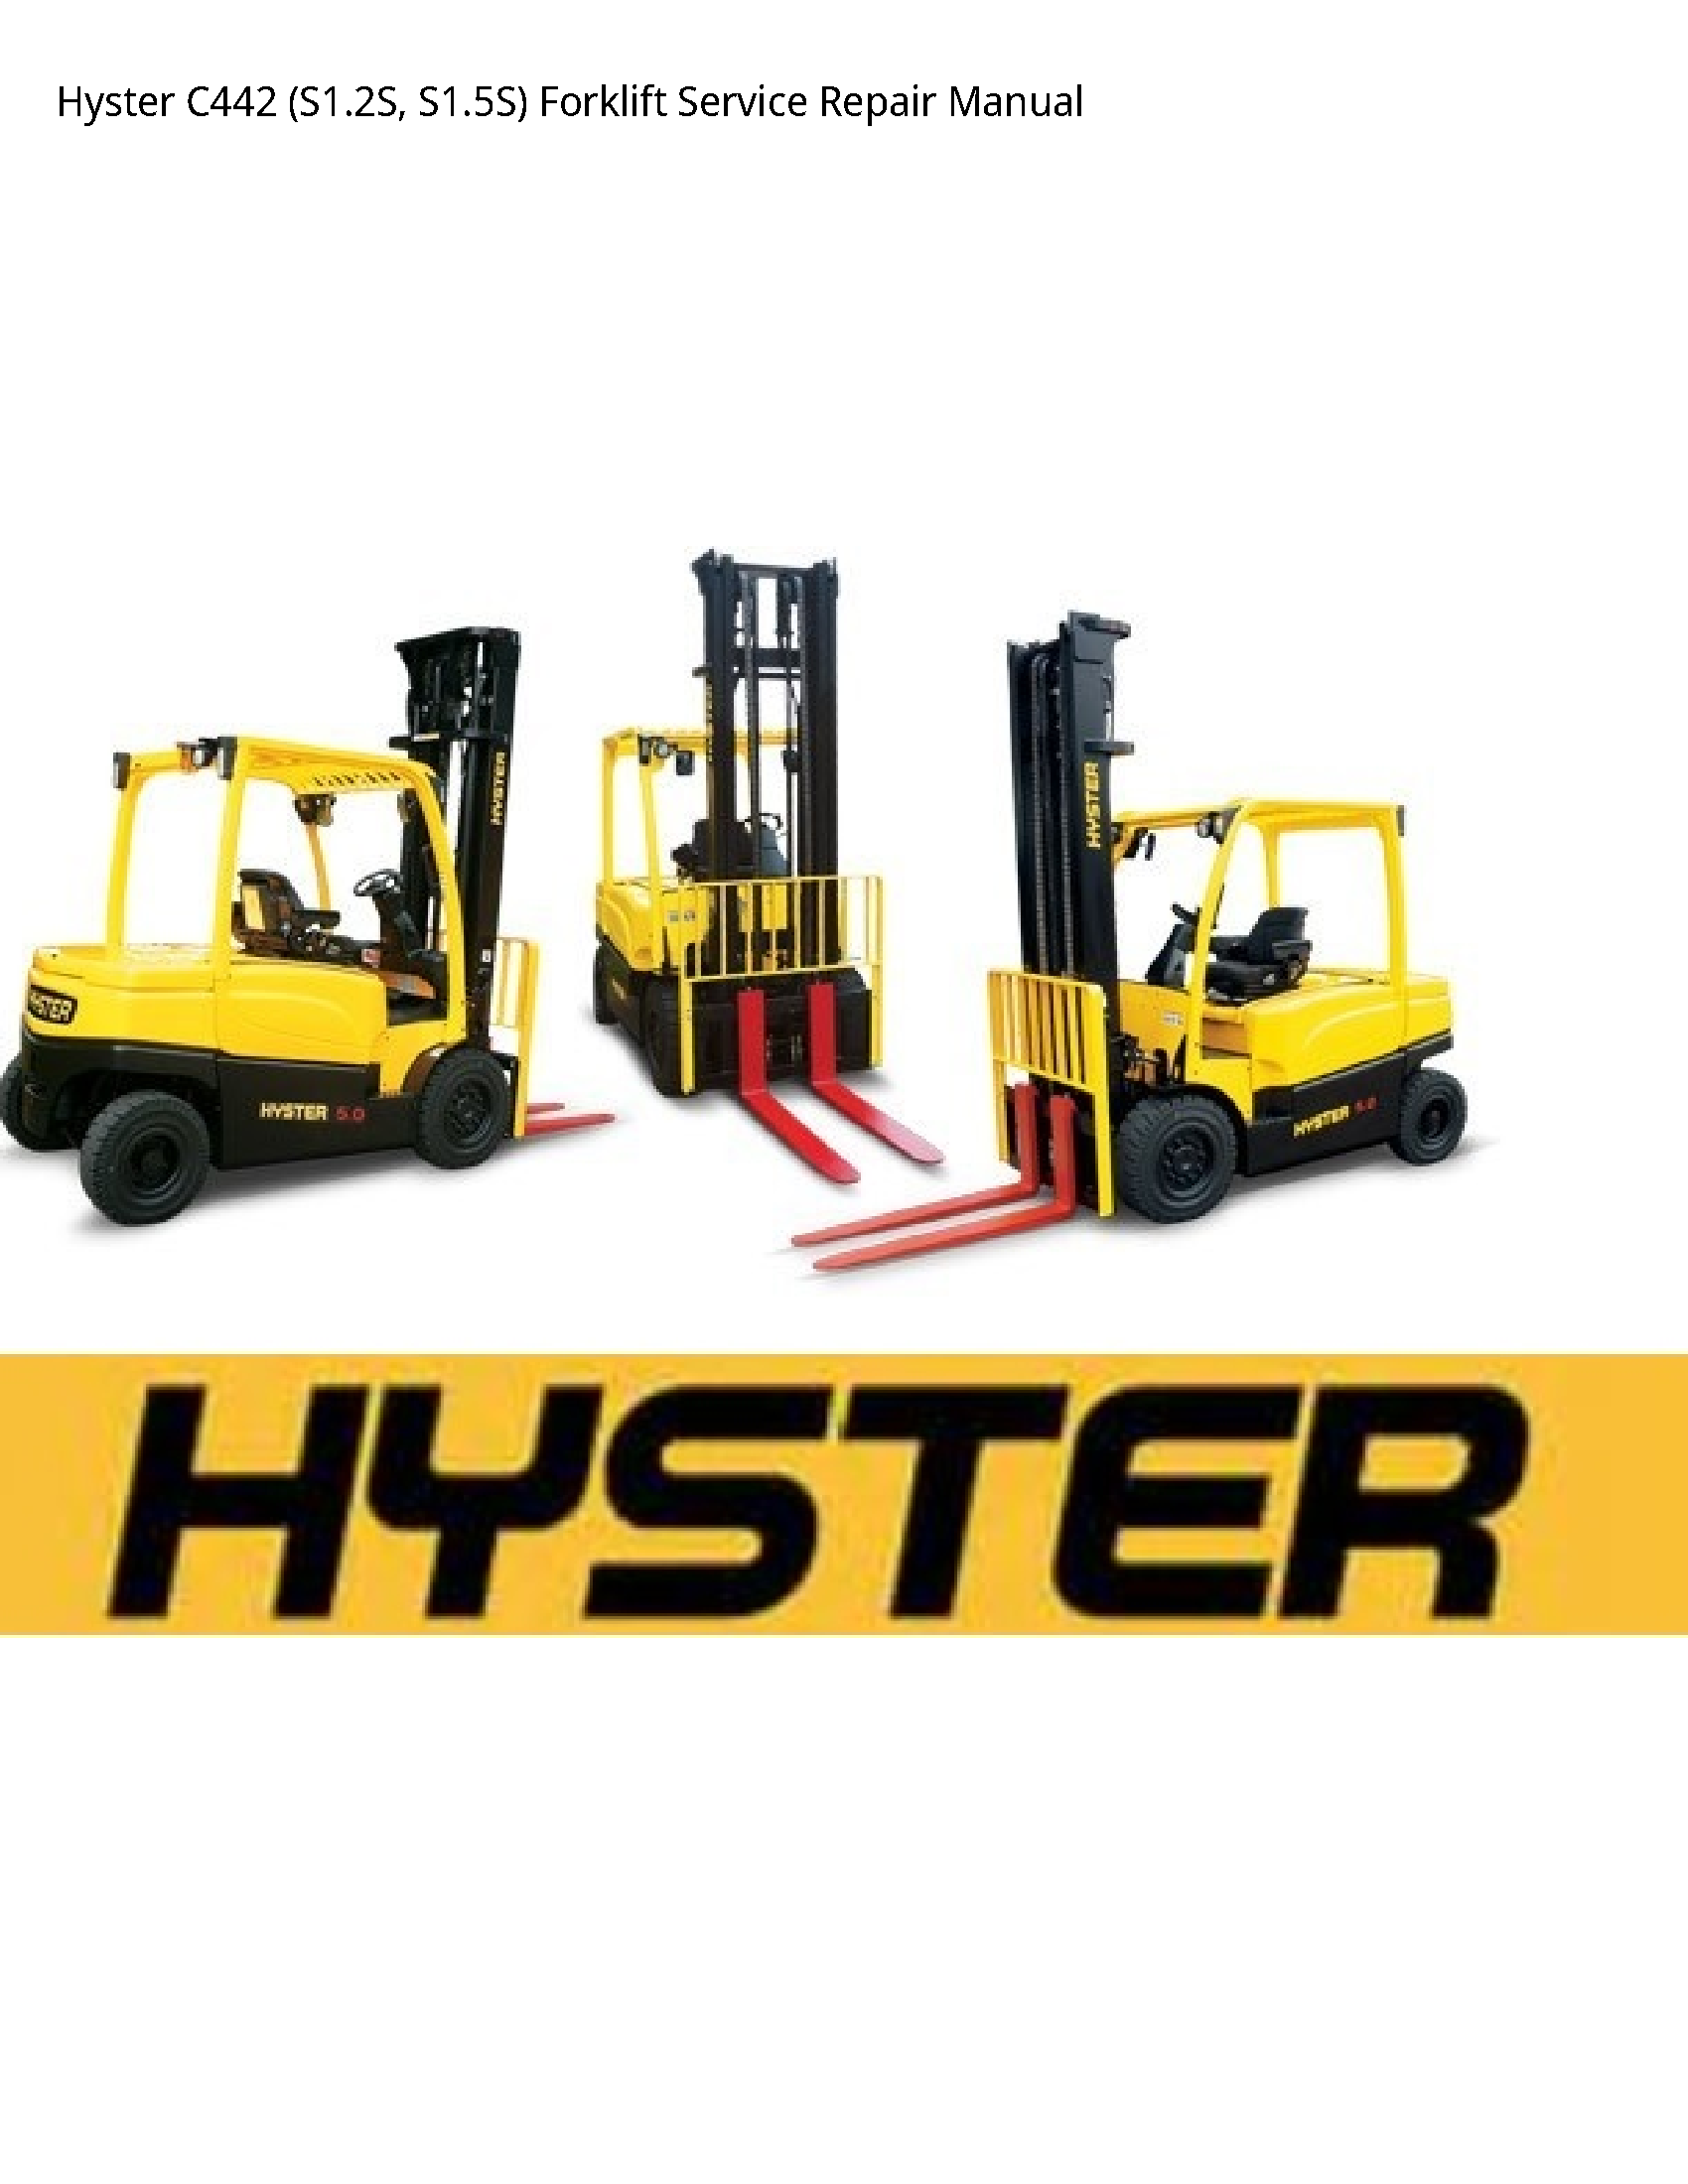 Hyster C442 Forklift manual